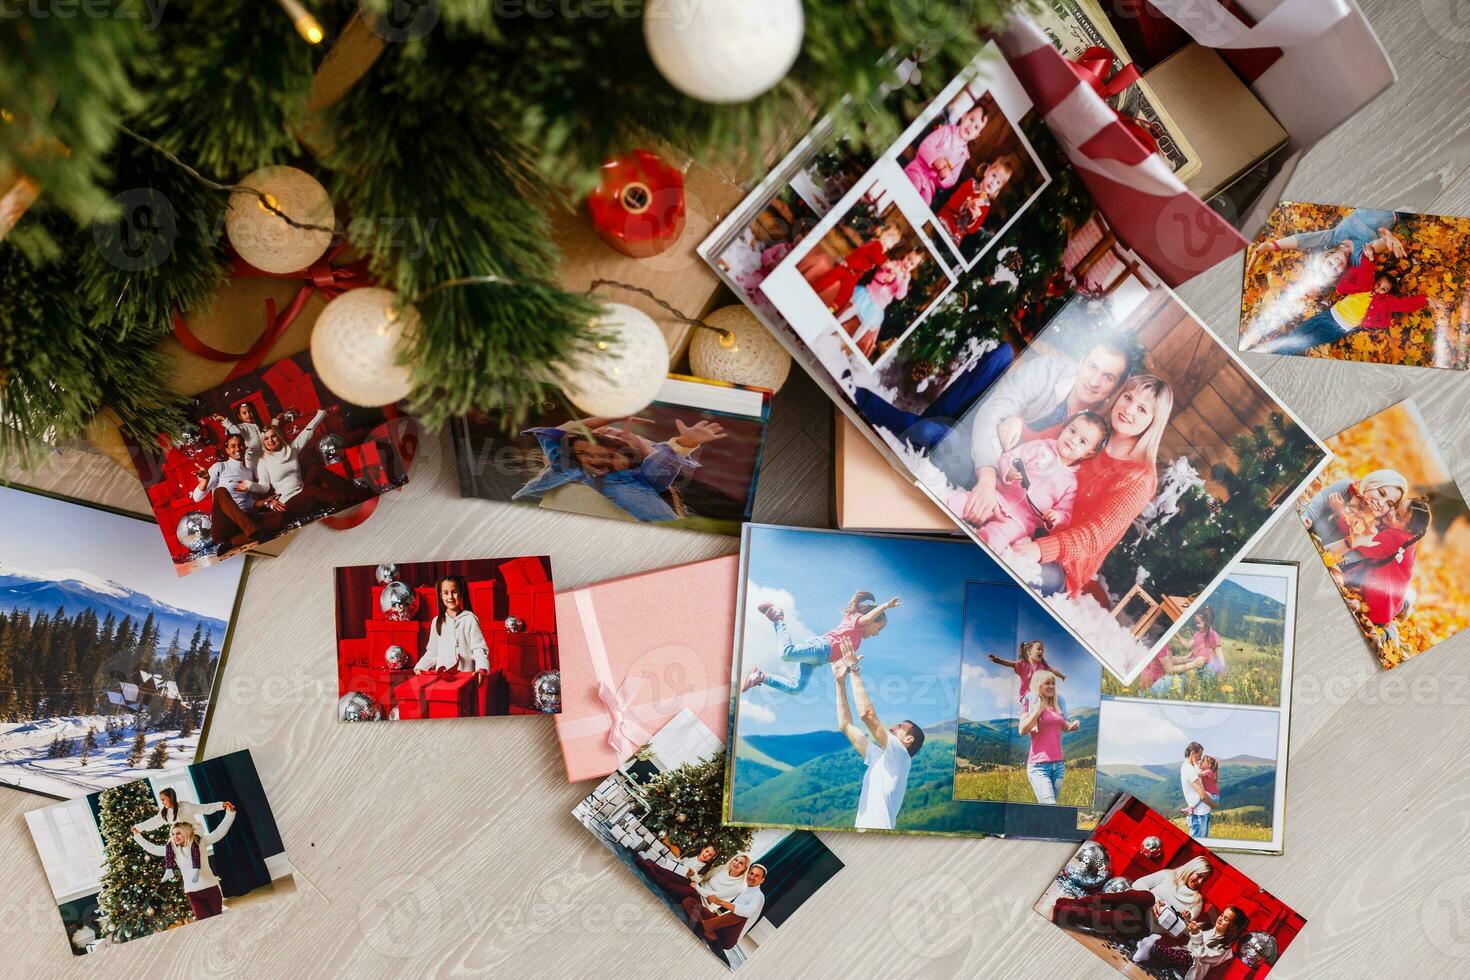 family photo album near the Christmas tree